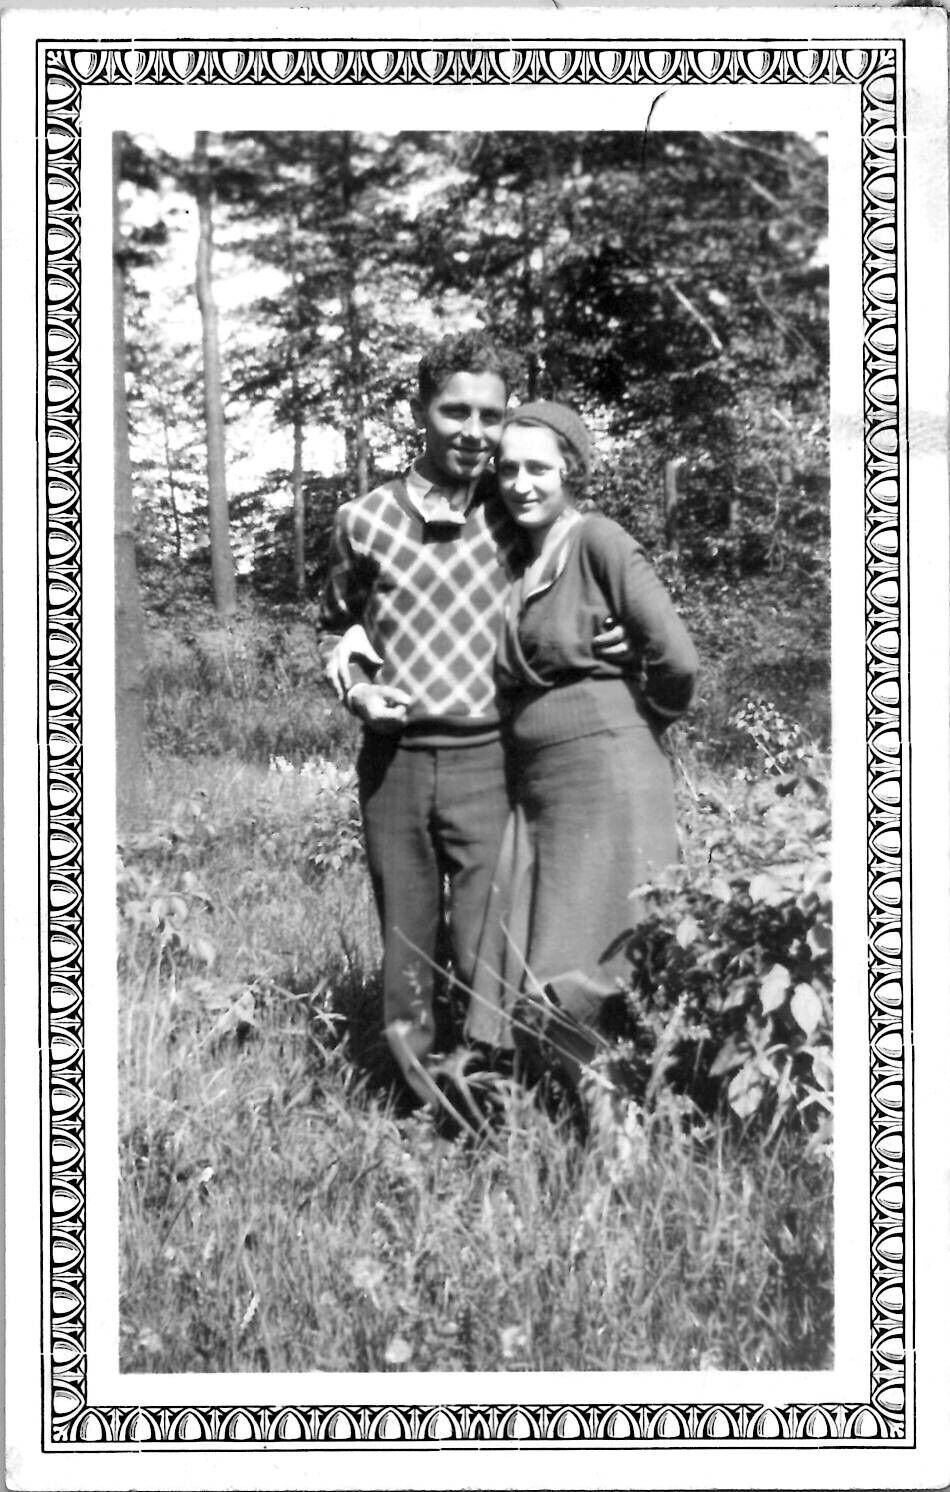 Romantic Boyfriend Girlfriend Fooling Around in the Forest 1920s Vintage Photo